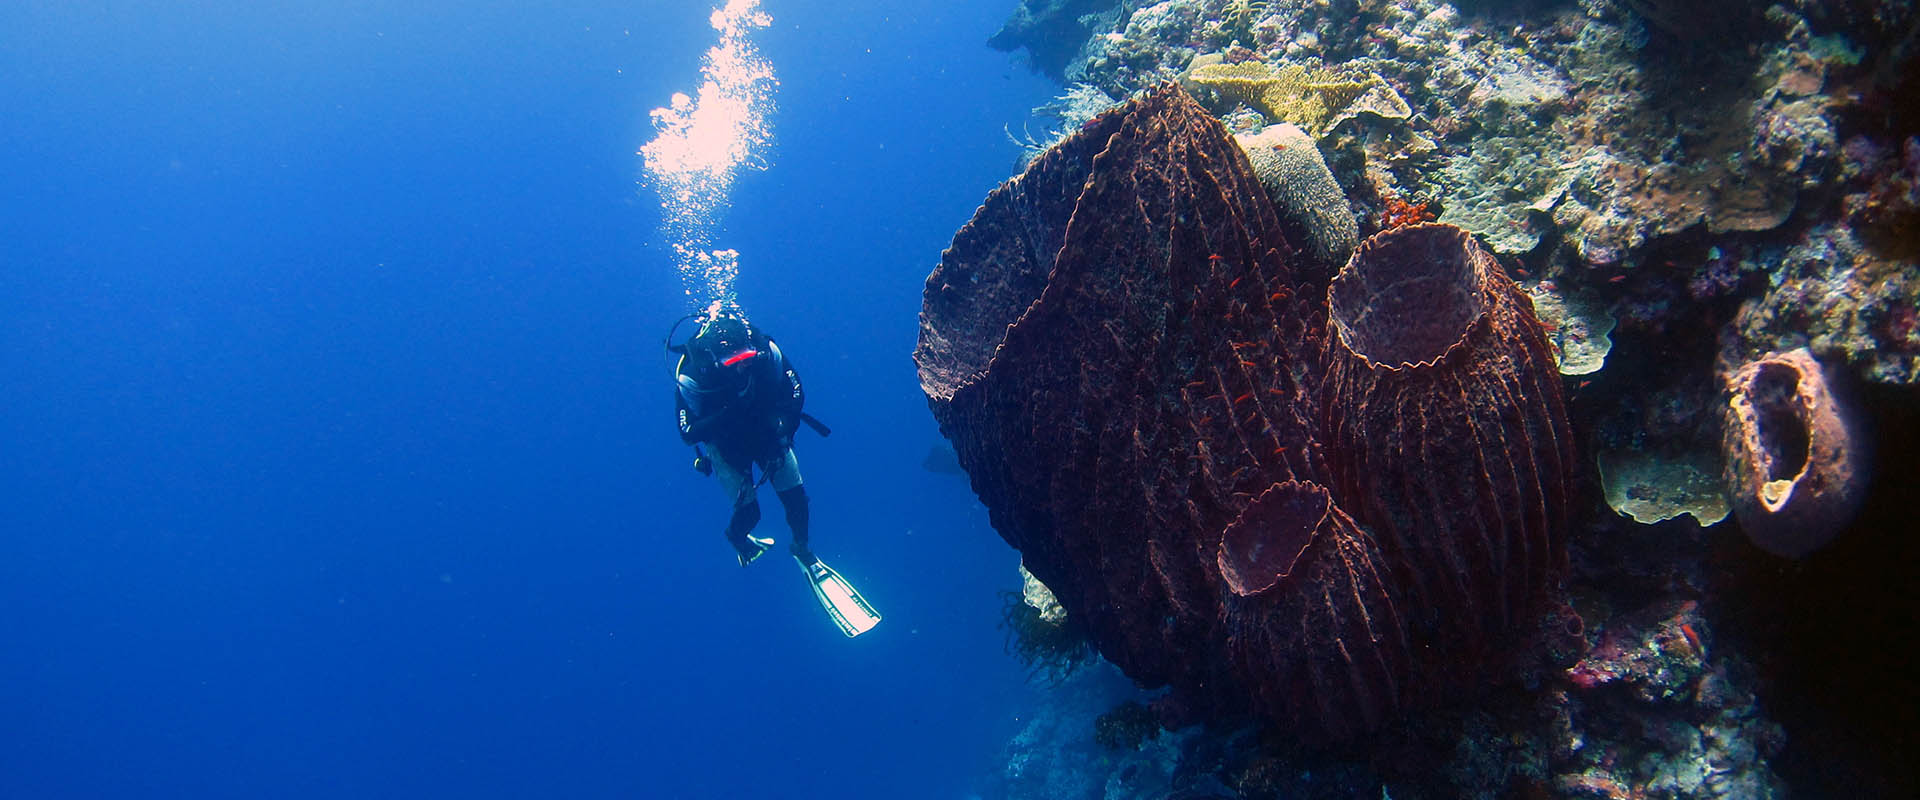 Banda Sea Liveaboard Diving